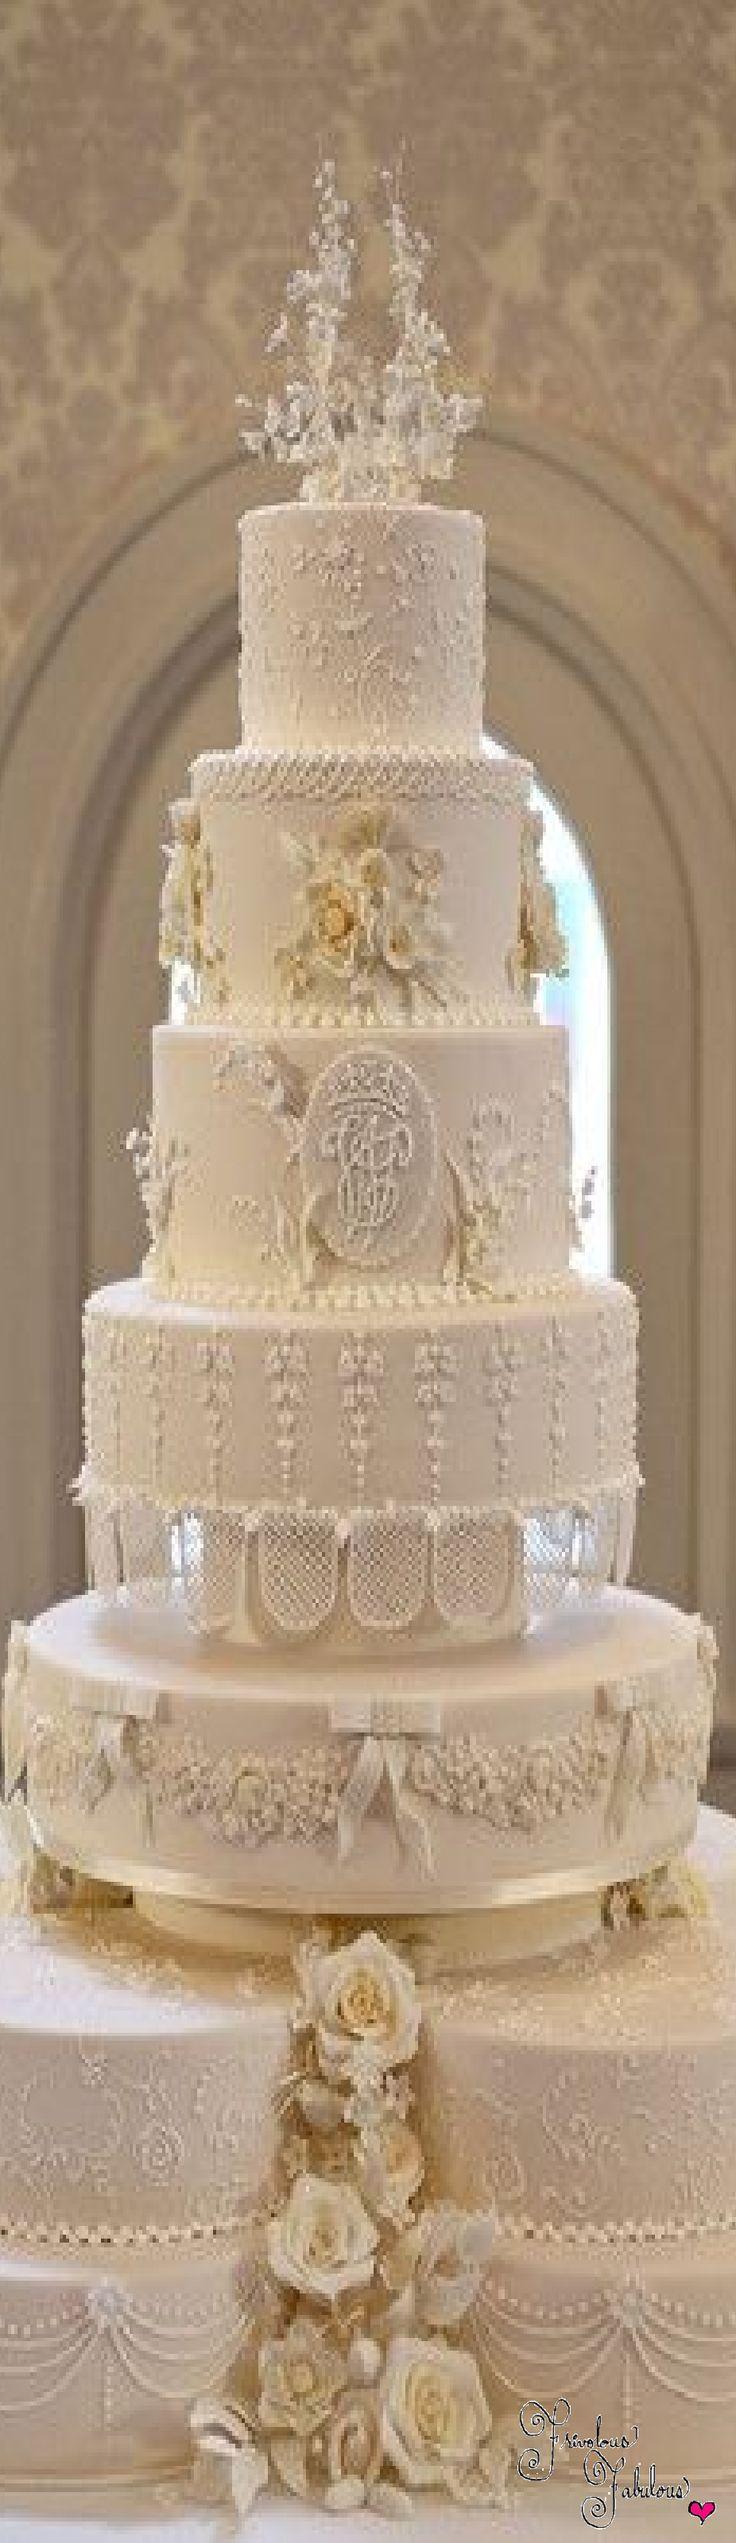 Wedding Cakes - Wedding Cake Ideas #2285122 - Weddbook